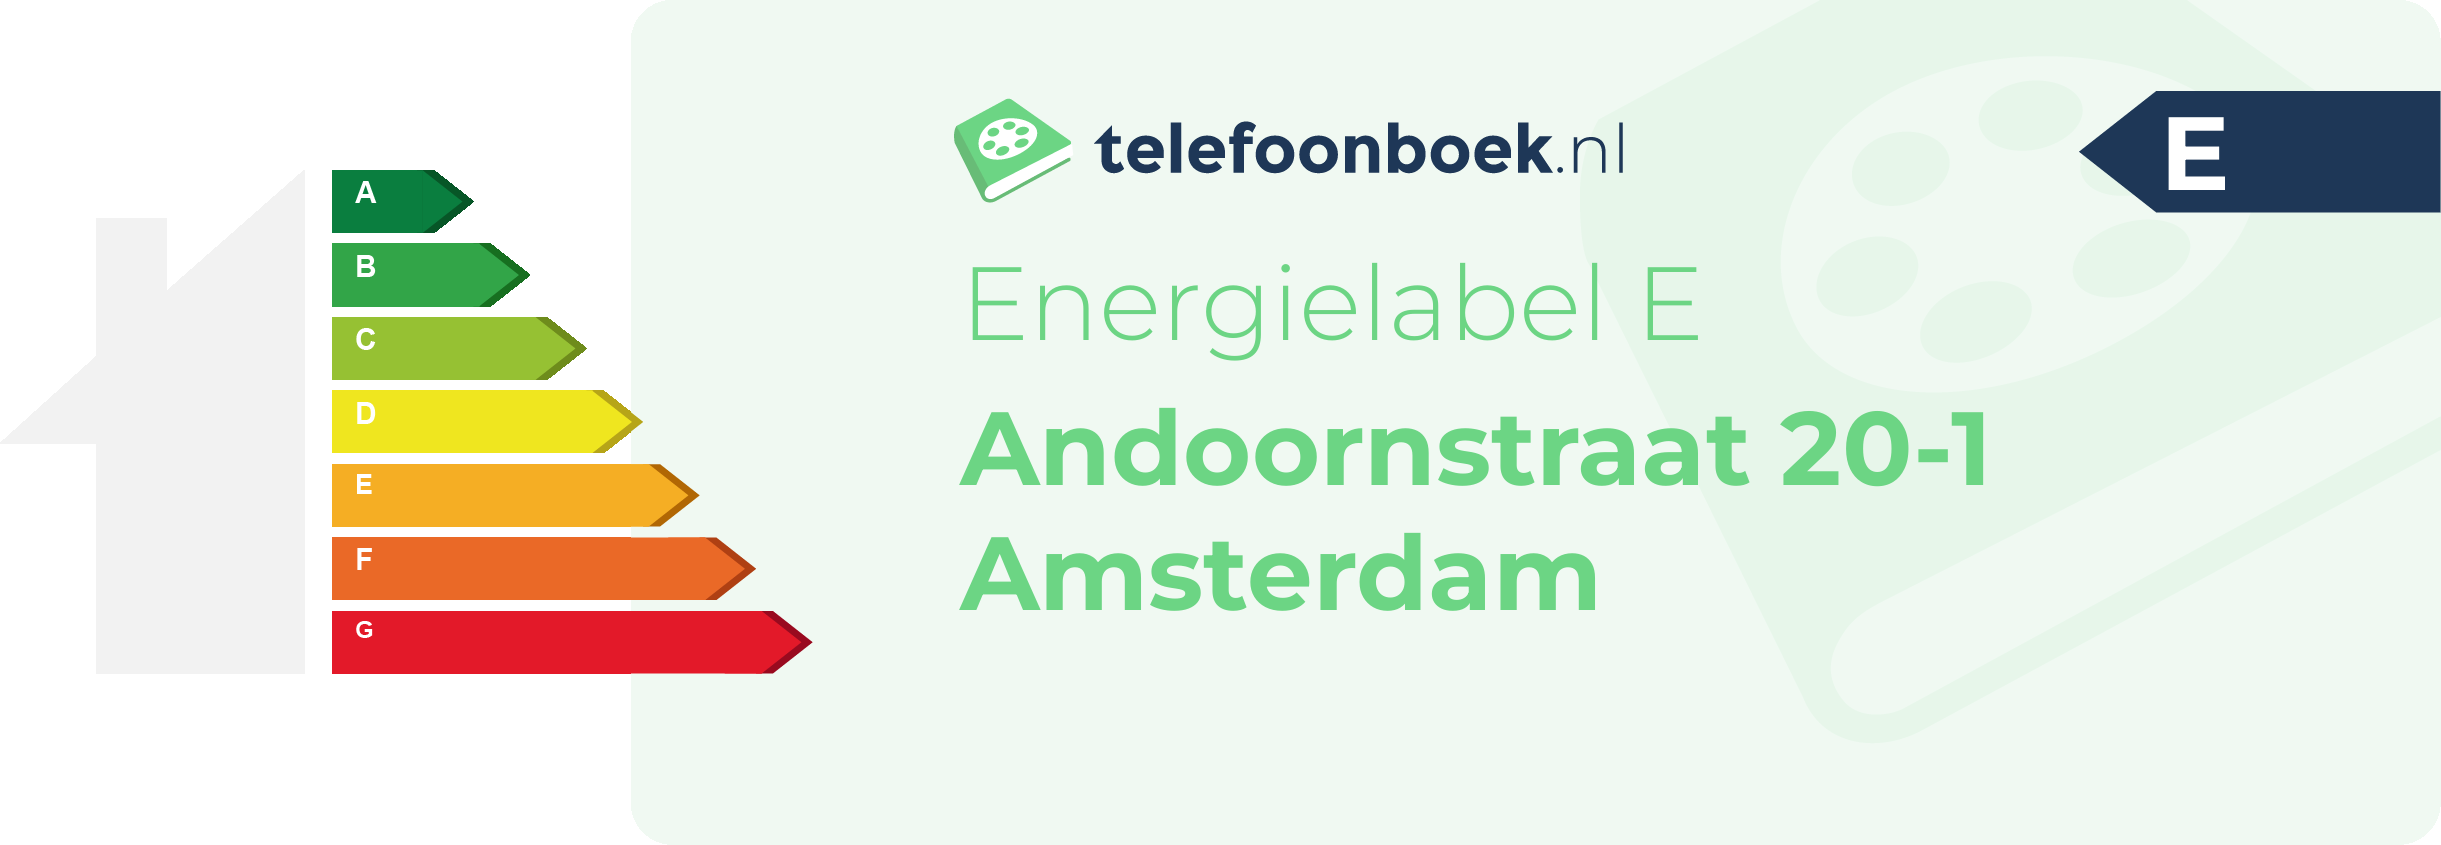 Energielabel Andoornstraat 20-1 Amsterdam